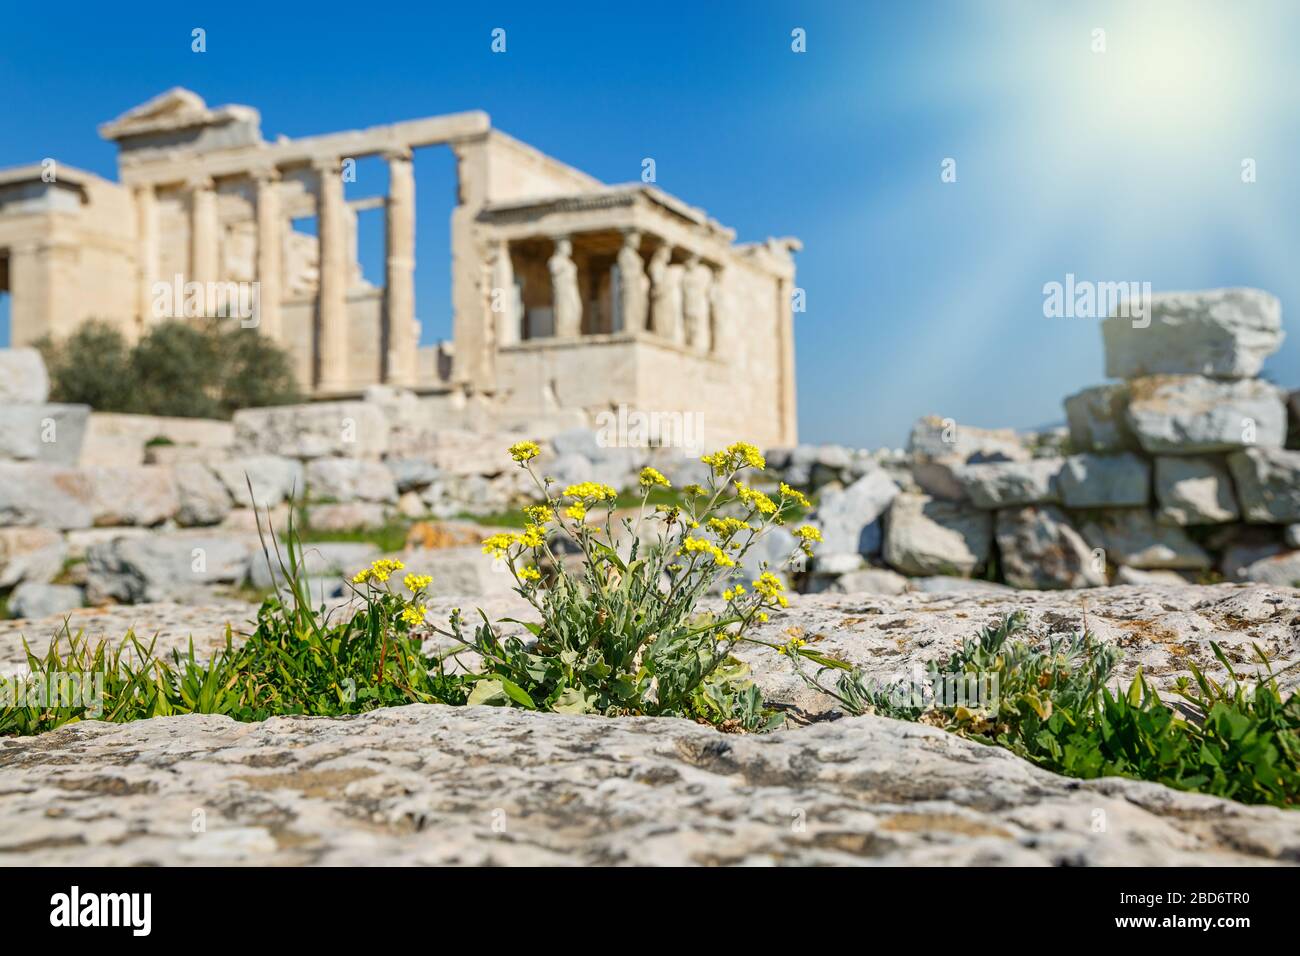 Ancient Greek ruins, columns, building. Acropolis, Athens, Greece. Stock Photo